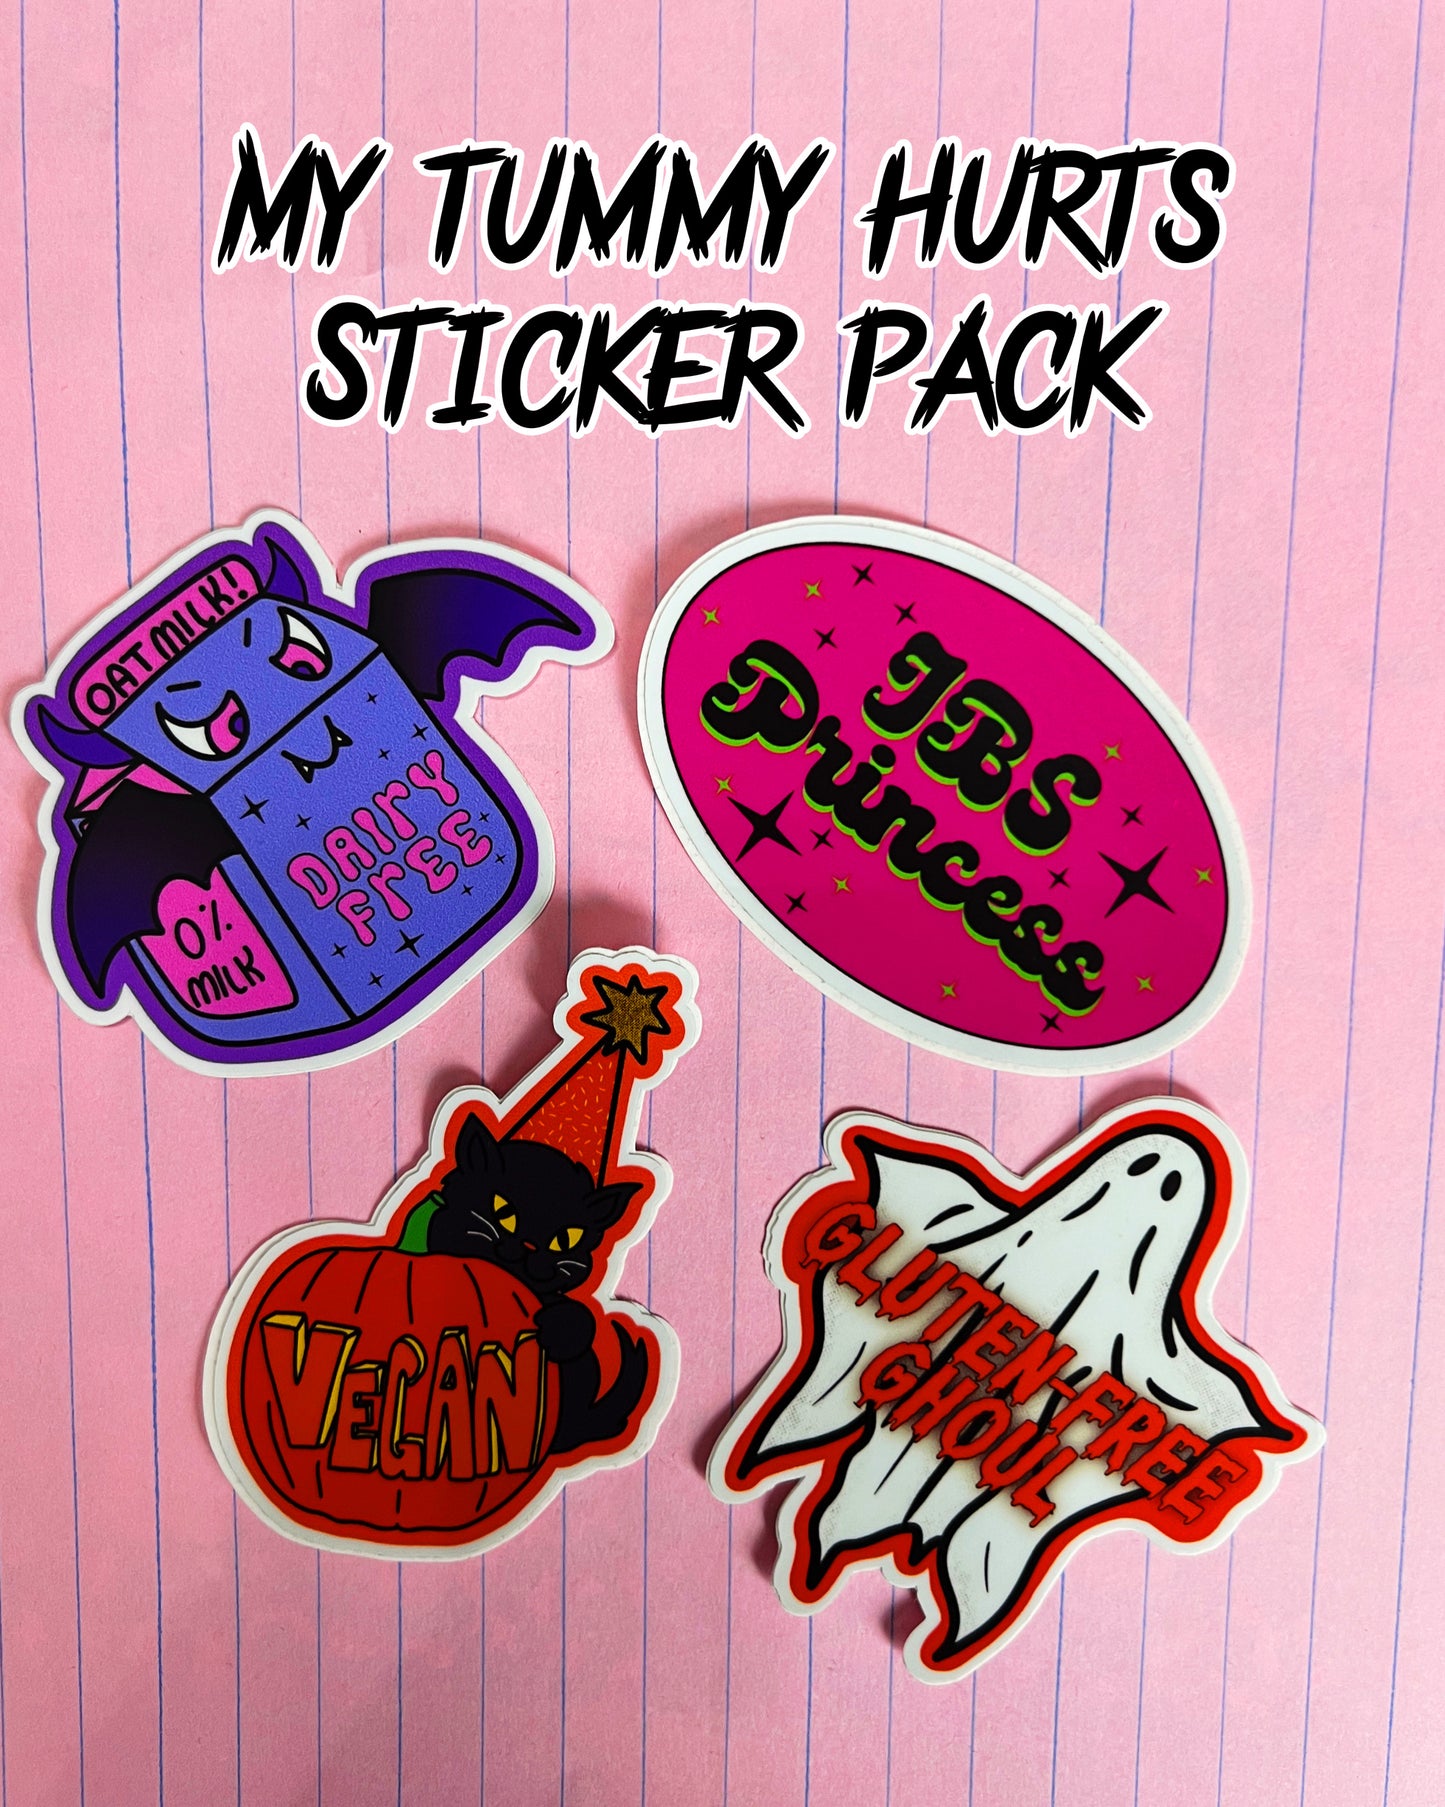 My Tummy Hurts Sticker Pack